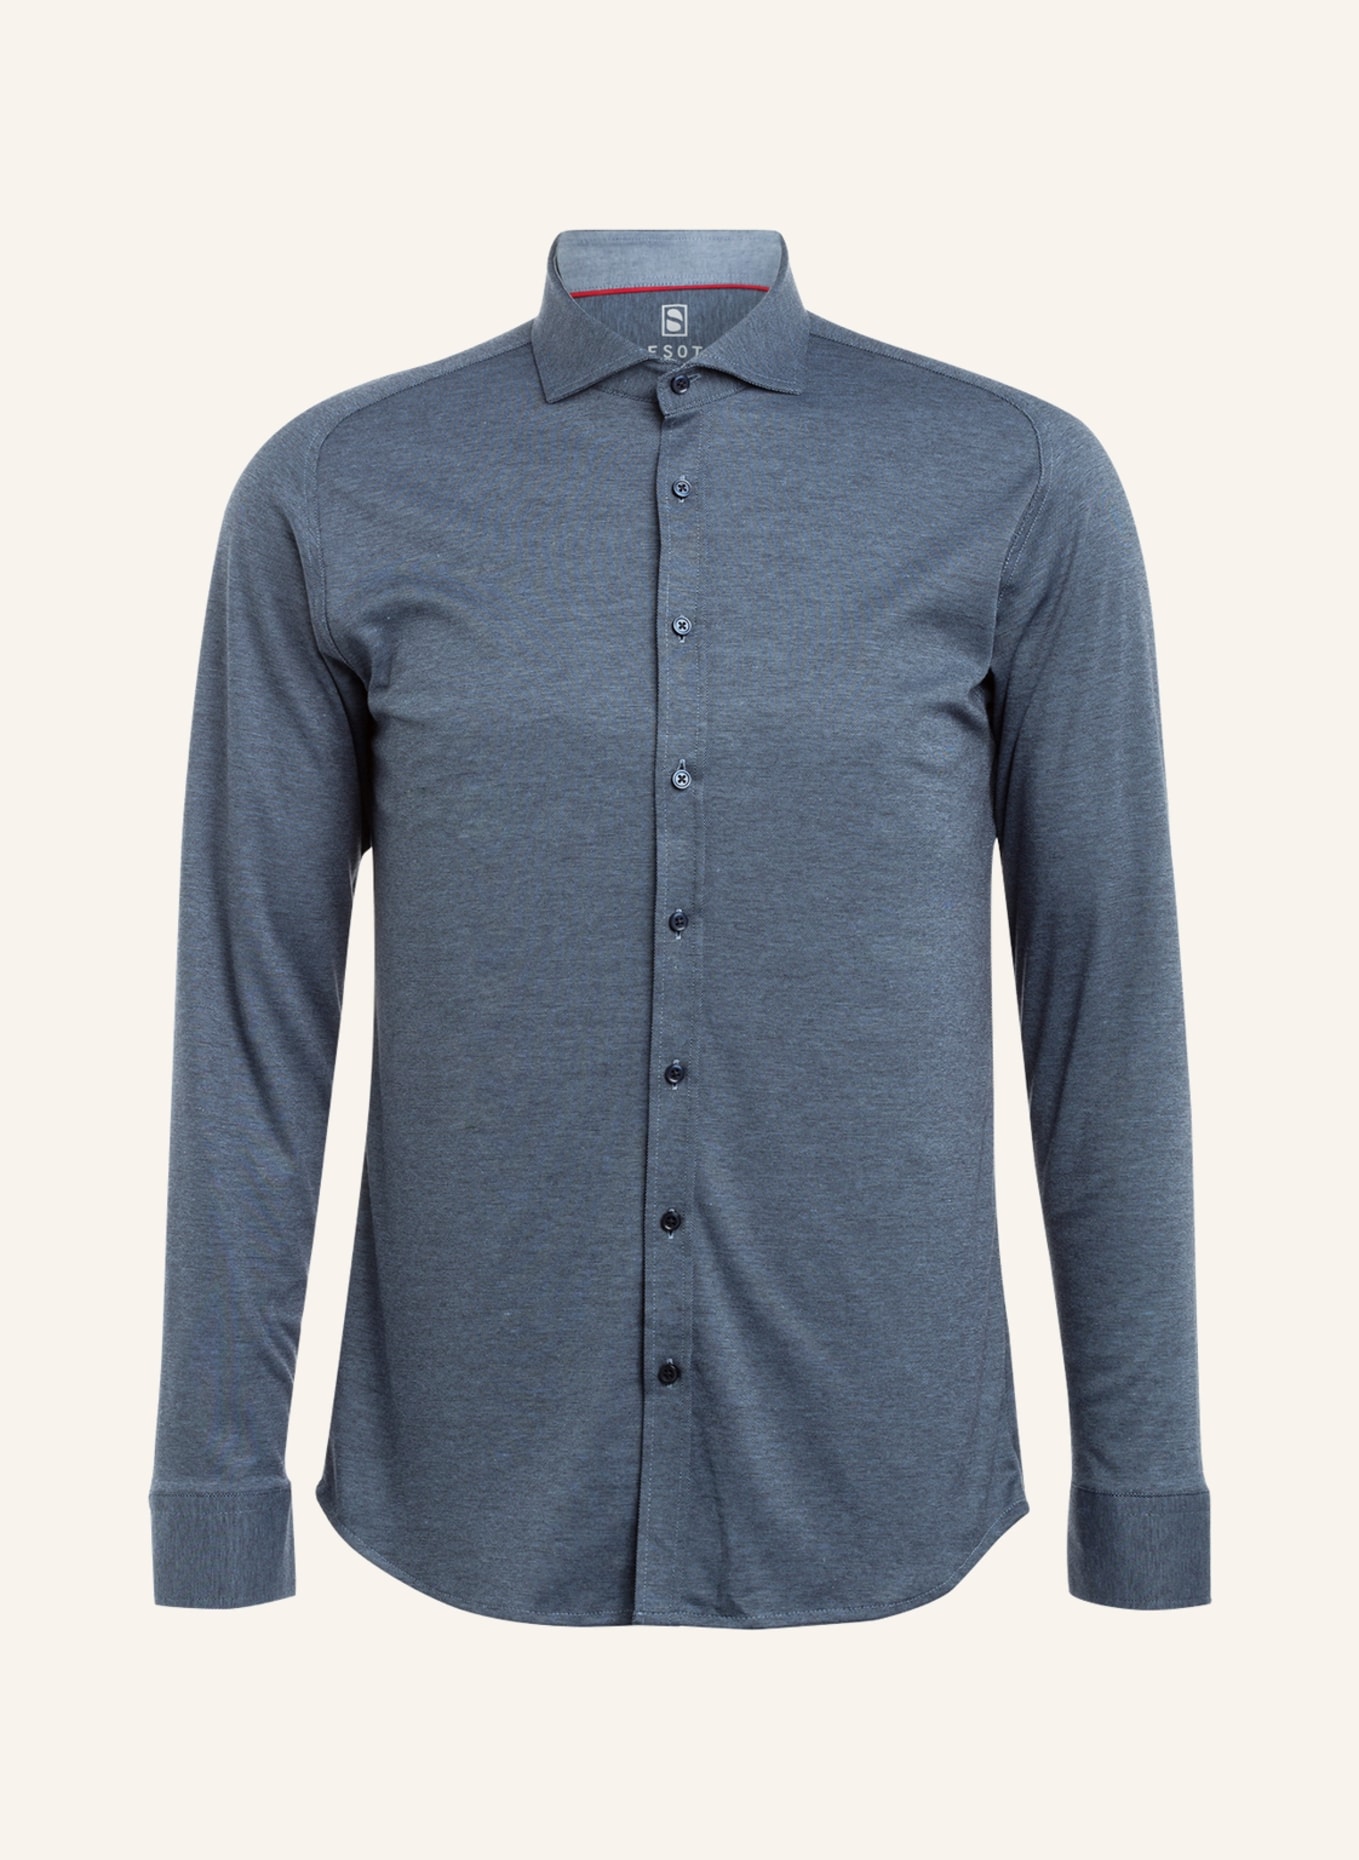 DESOTO Jerseyhemd Slim Fit, Farbe: BLAUGRAU (Bild 1)